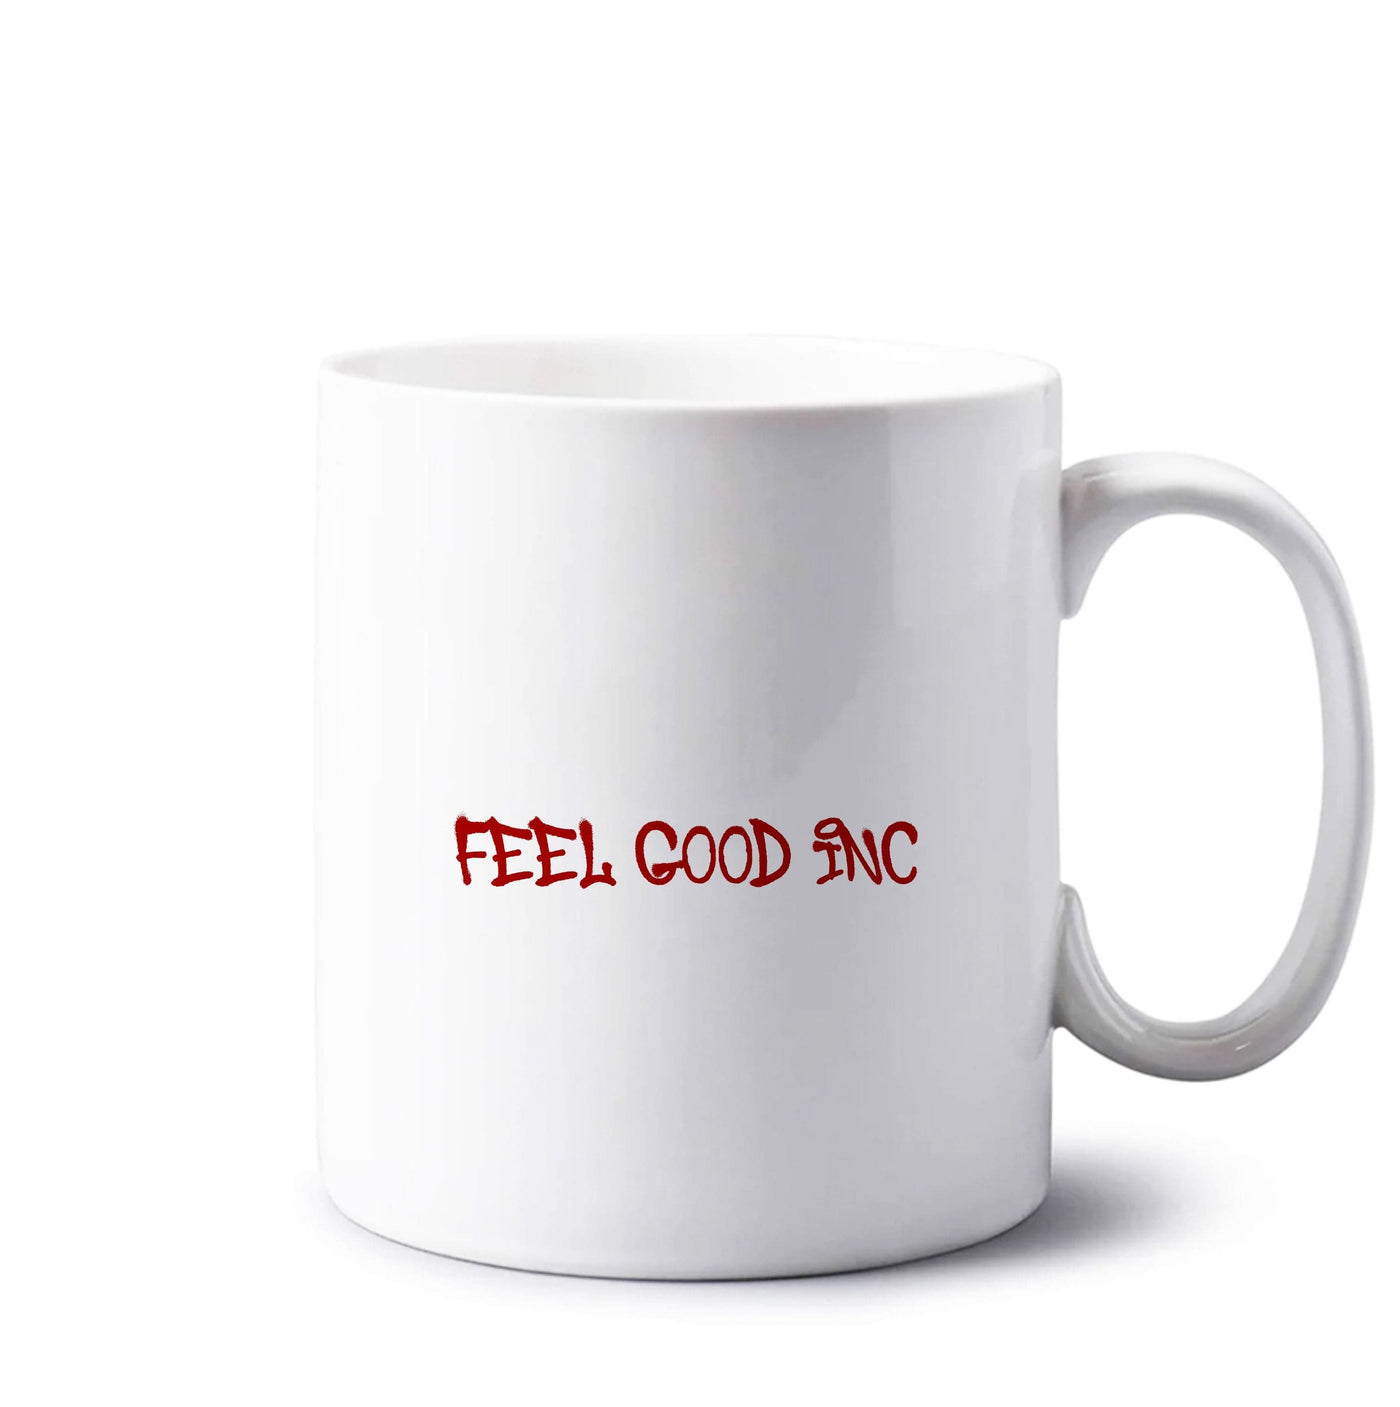 Feel Good Inc - Gorillaz Mug